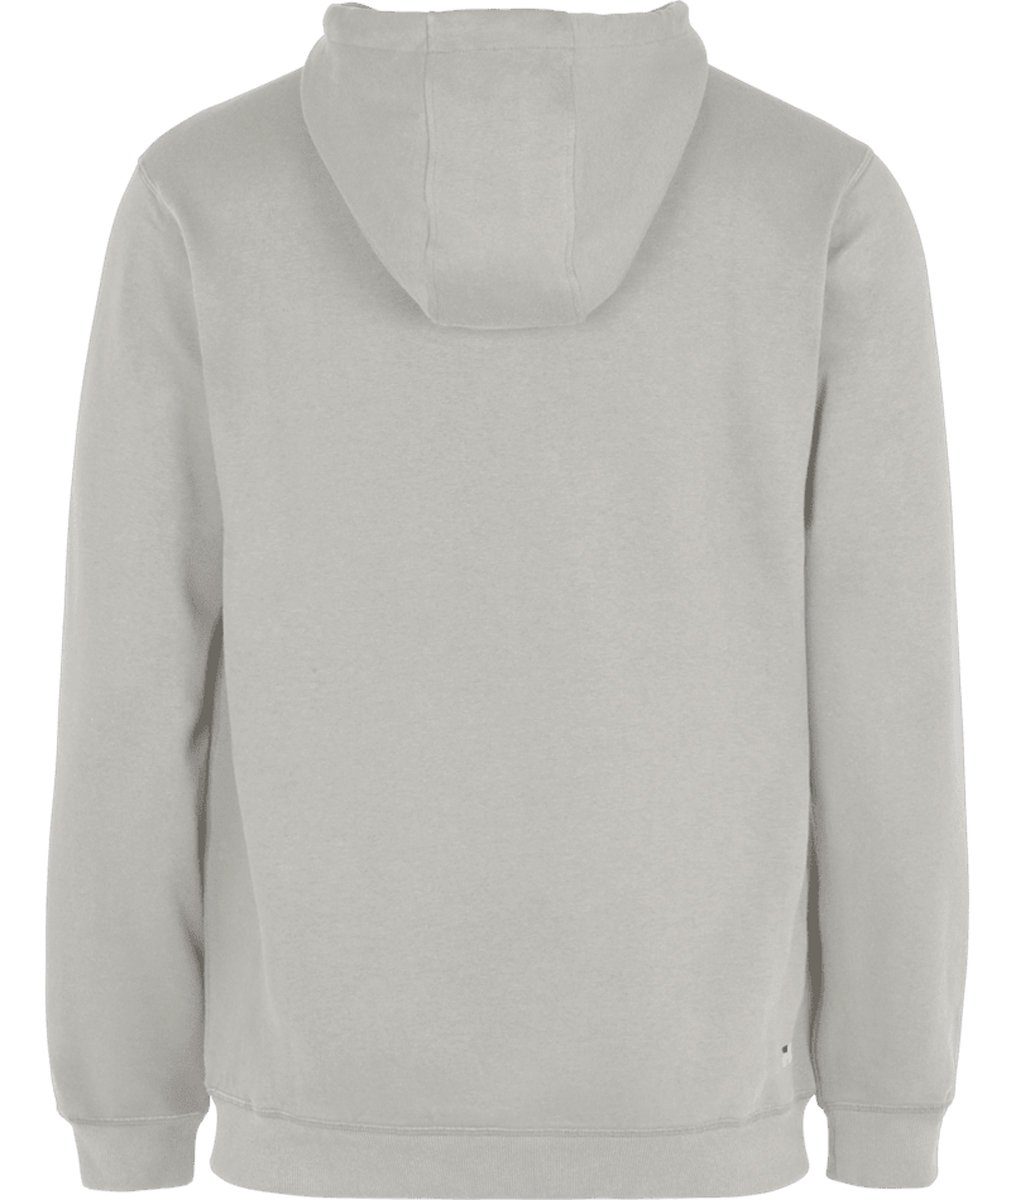 Sweater BARUMINI Unisex Grau Fila Sweatshirt - Hoodie hoody,